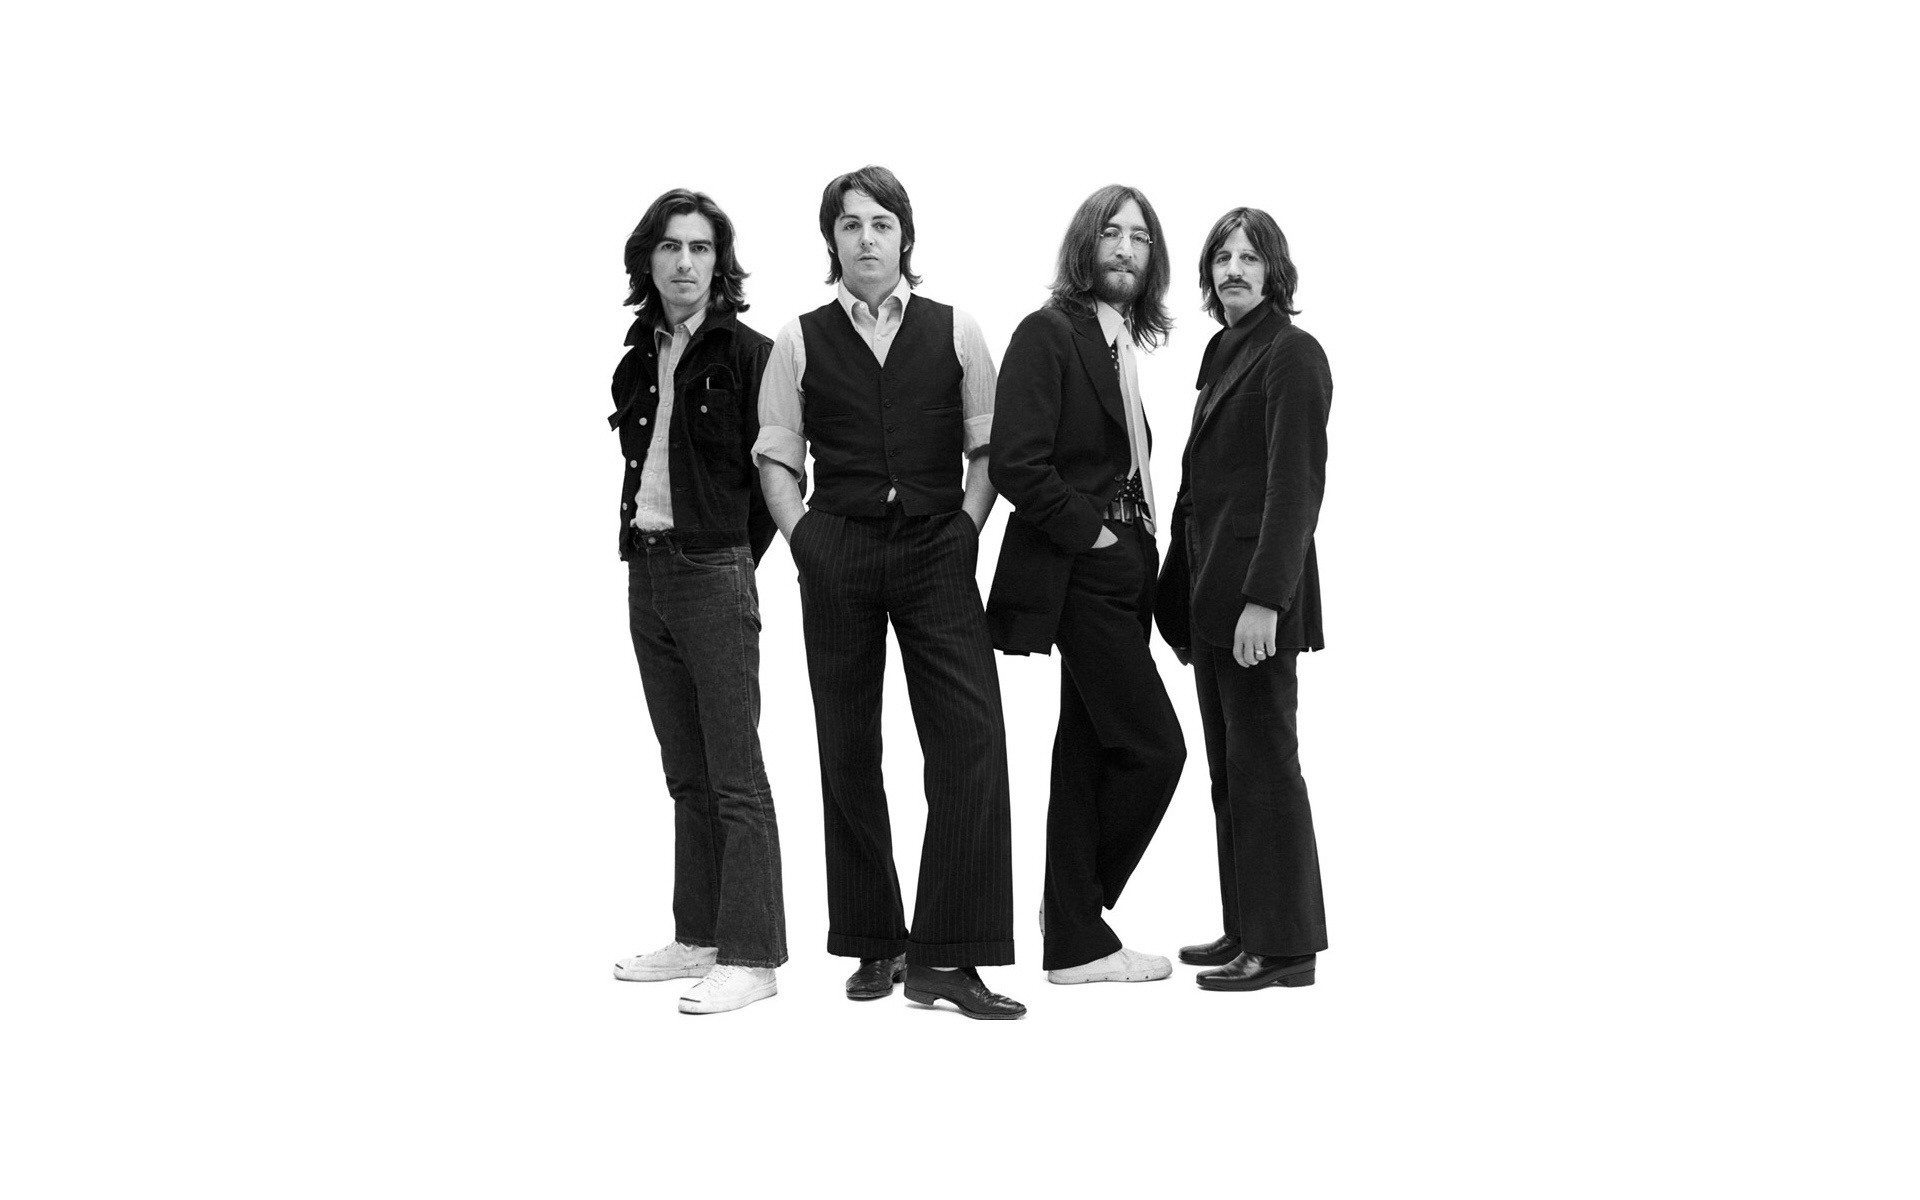 1920x1200 The Beatles HD Widescreen Wallpaper. img1be1.jpg. 1920 x 1200